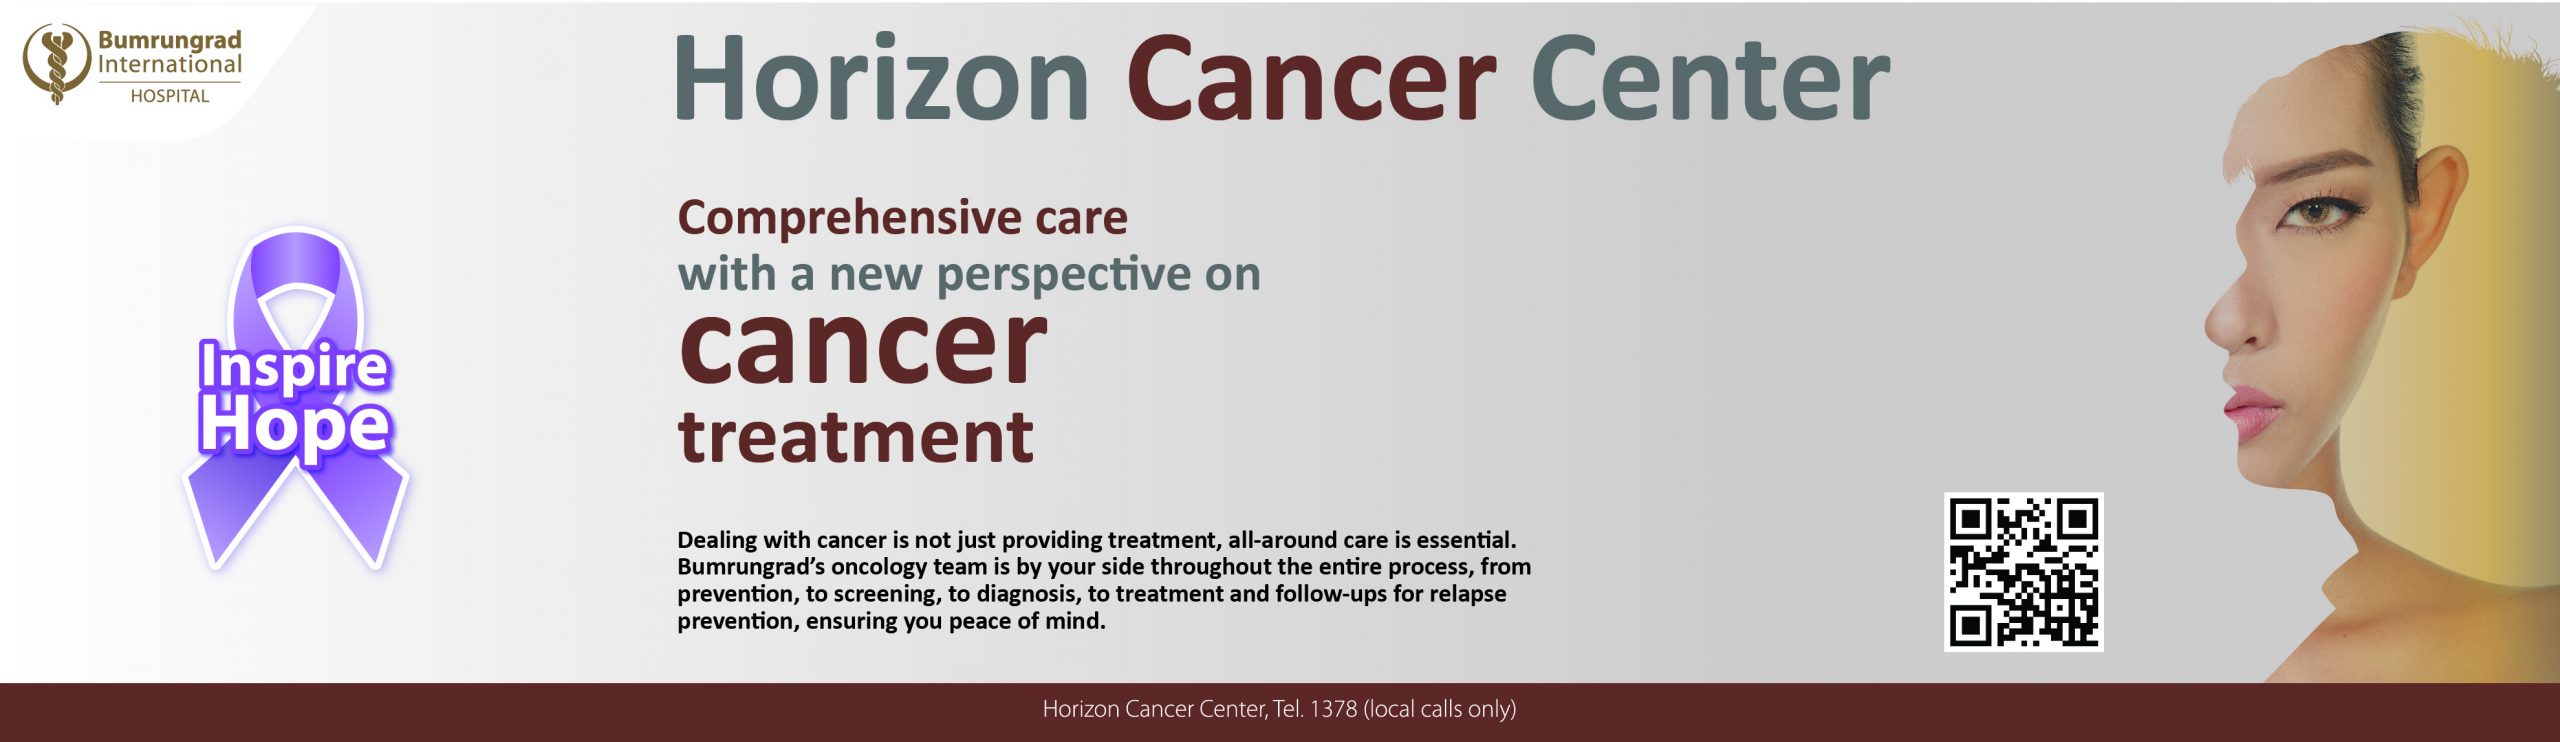 Bumrungrad International Hospital: Horizon Cancer Treatment Center